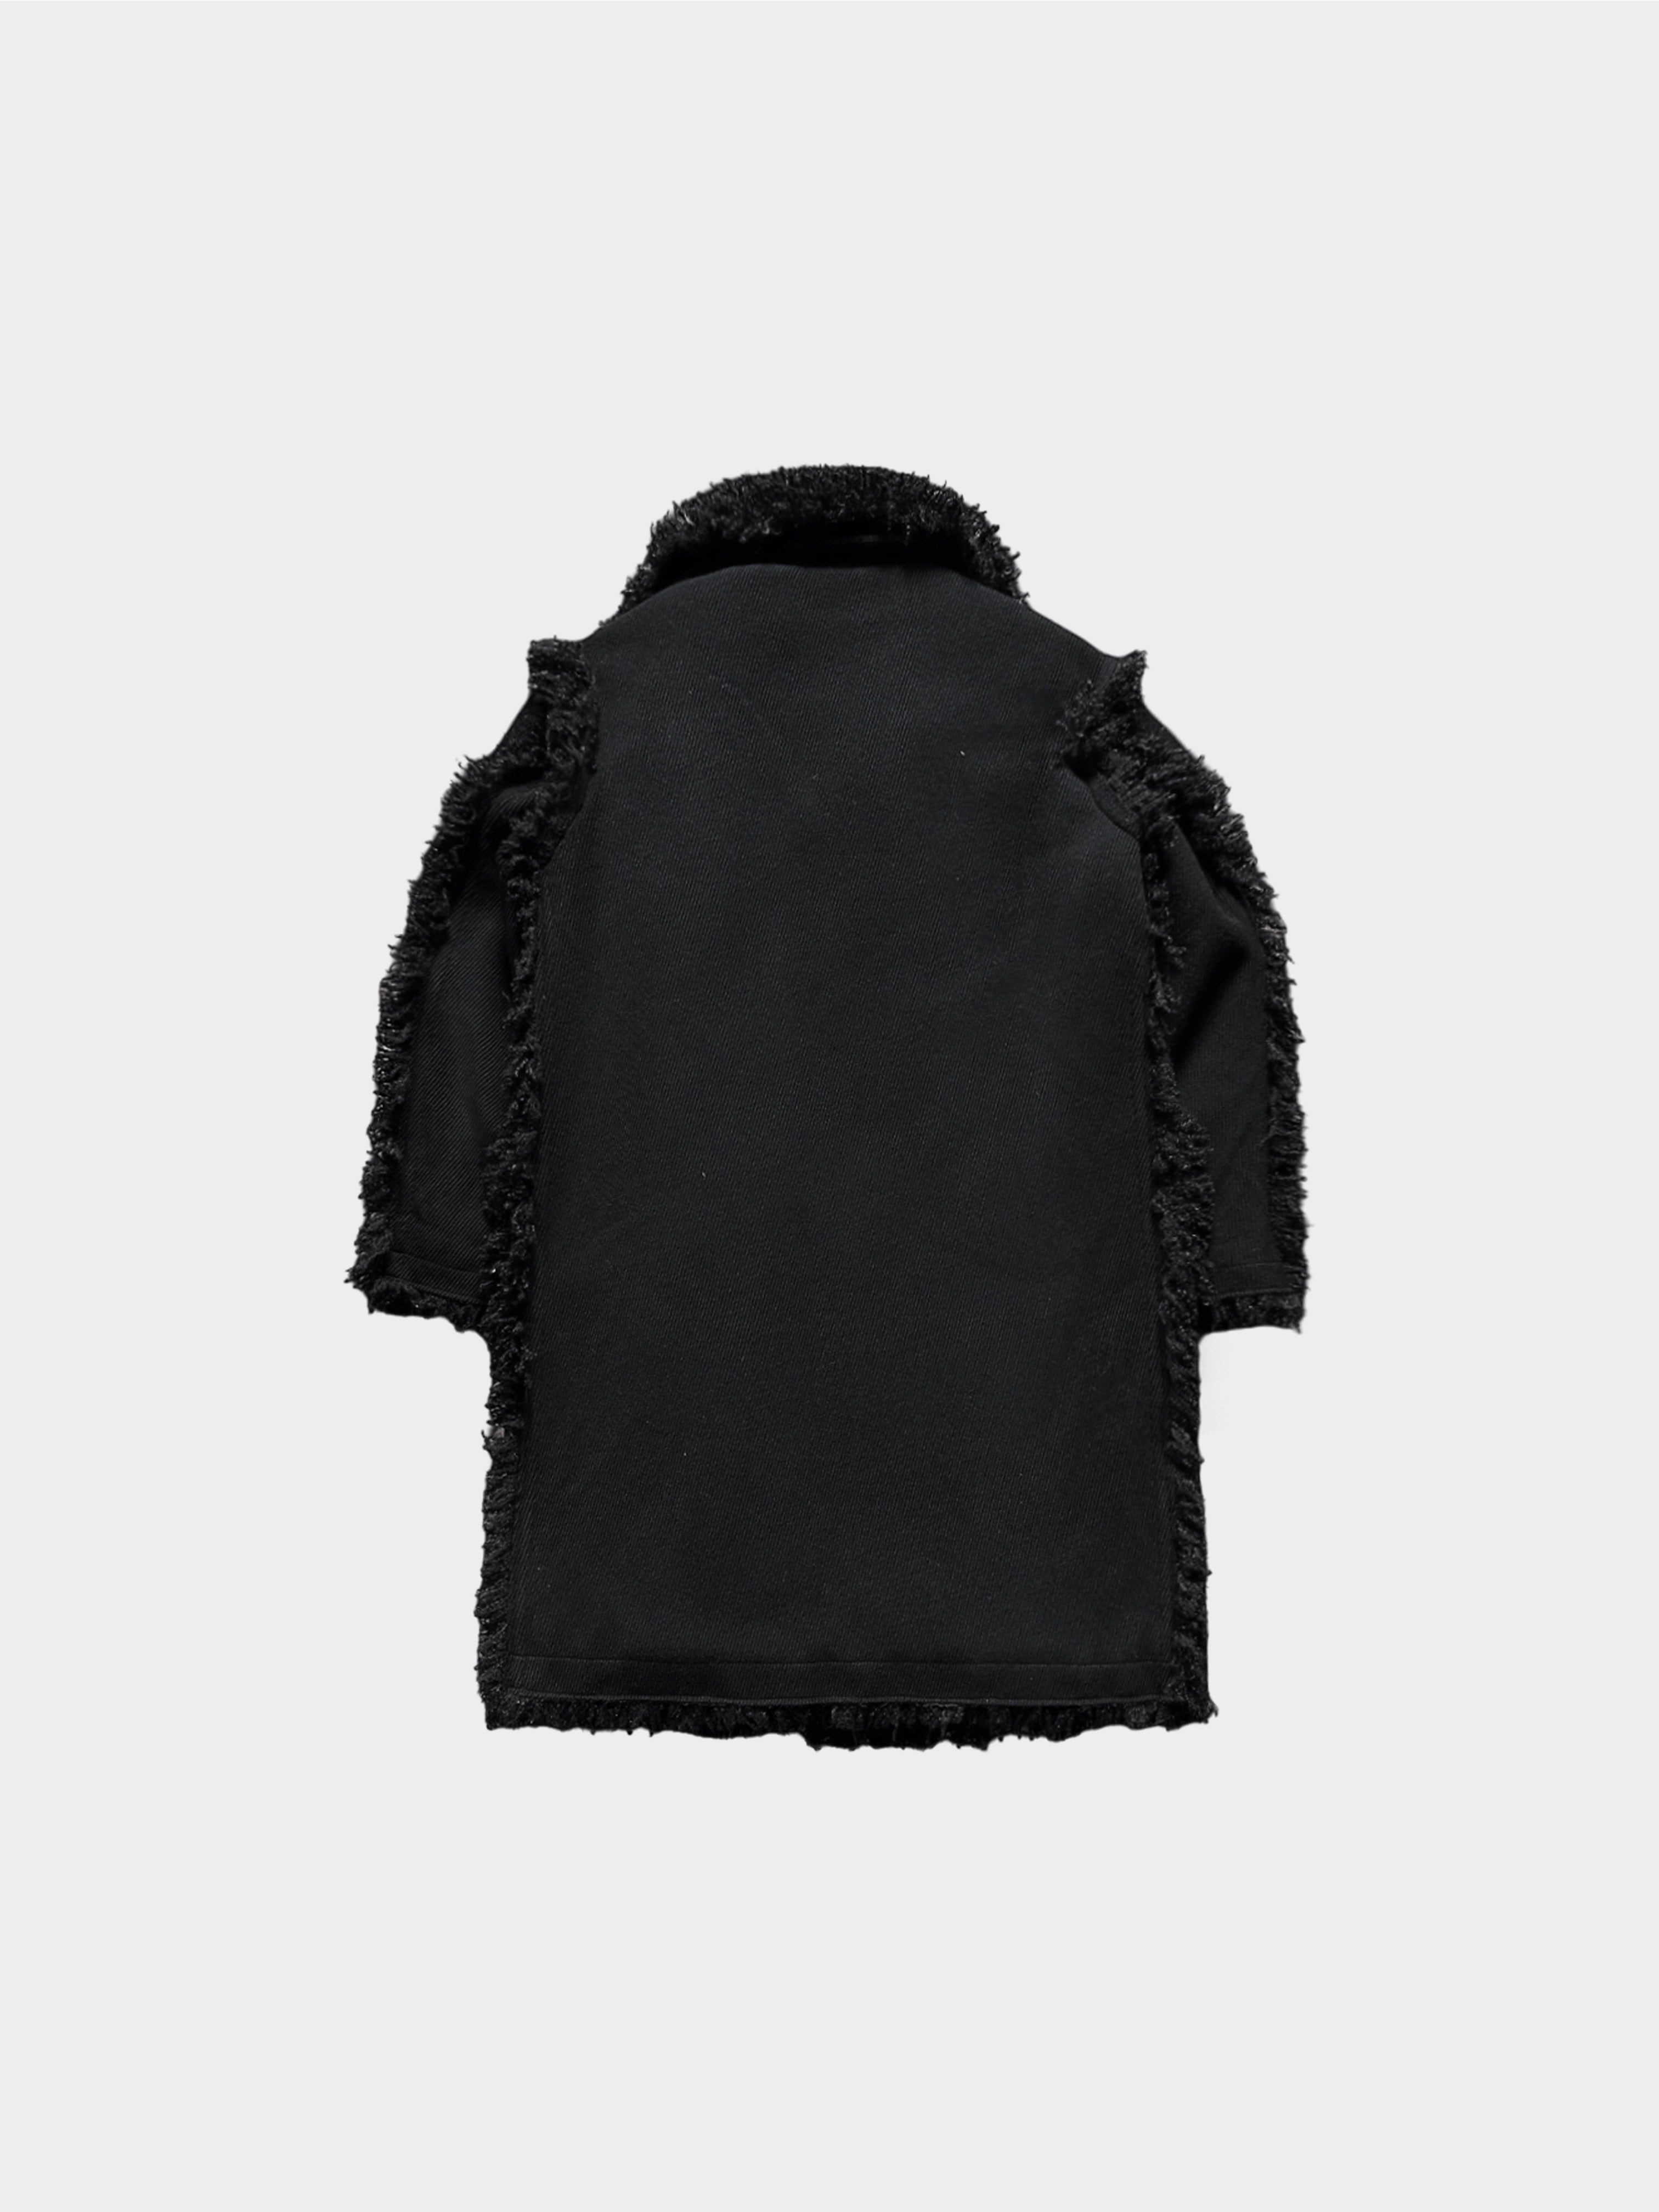 Yohji Yamamoto FW 2013 Pour Homme Black Loop Fur Coat